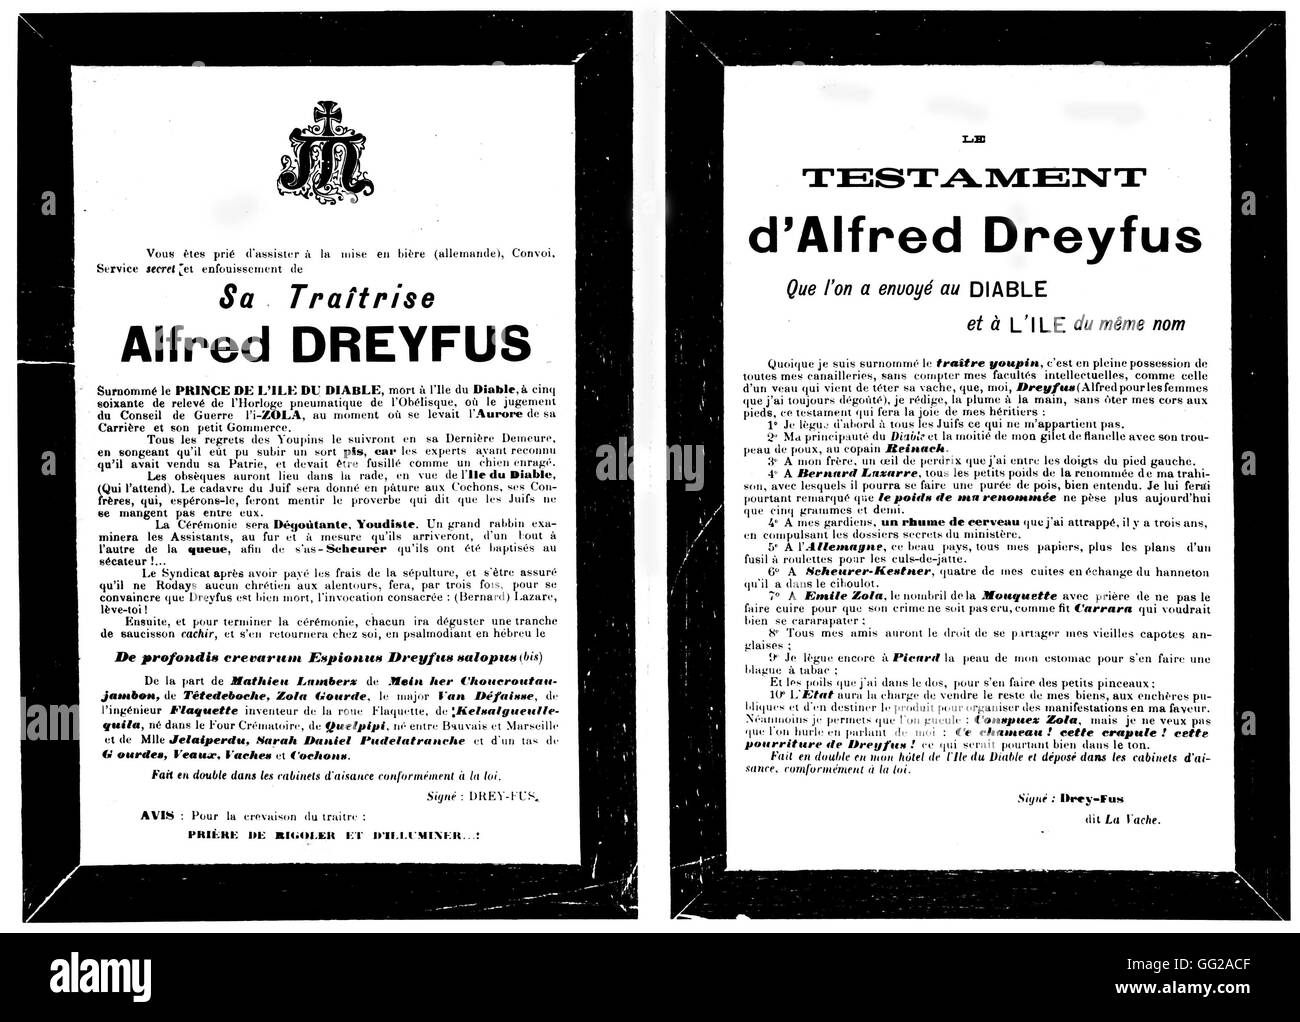 Anti-dreyfusard poster. The fake will of Alfred Dreyfus 1898 France - Dreyfus affair Stock Photo